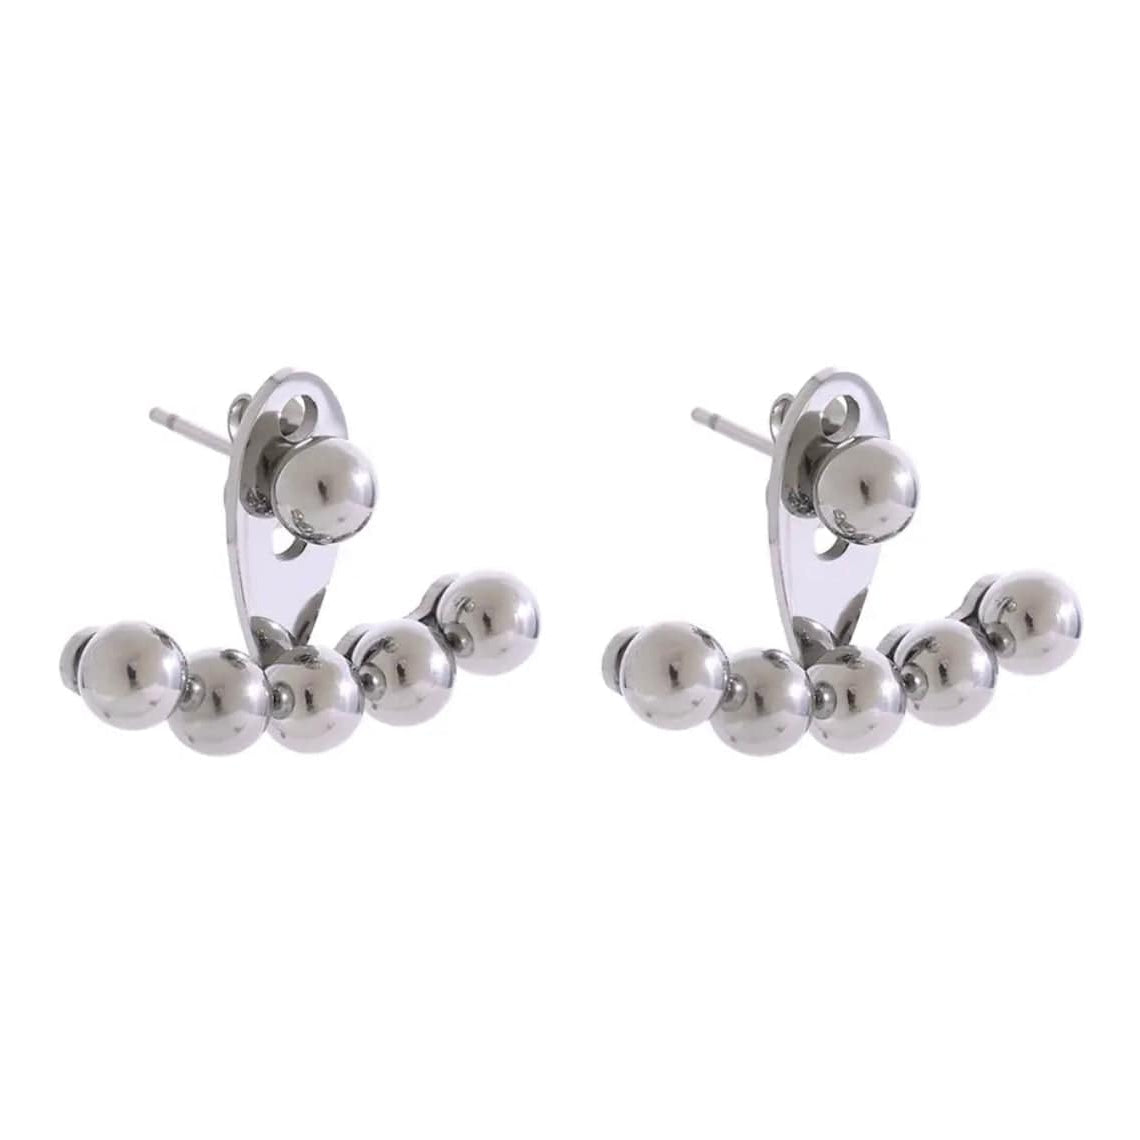 Dona Trend Jewelry Silver Spheres Earrings